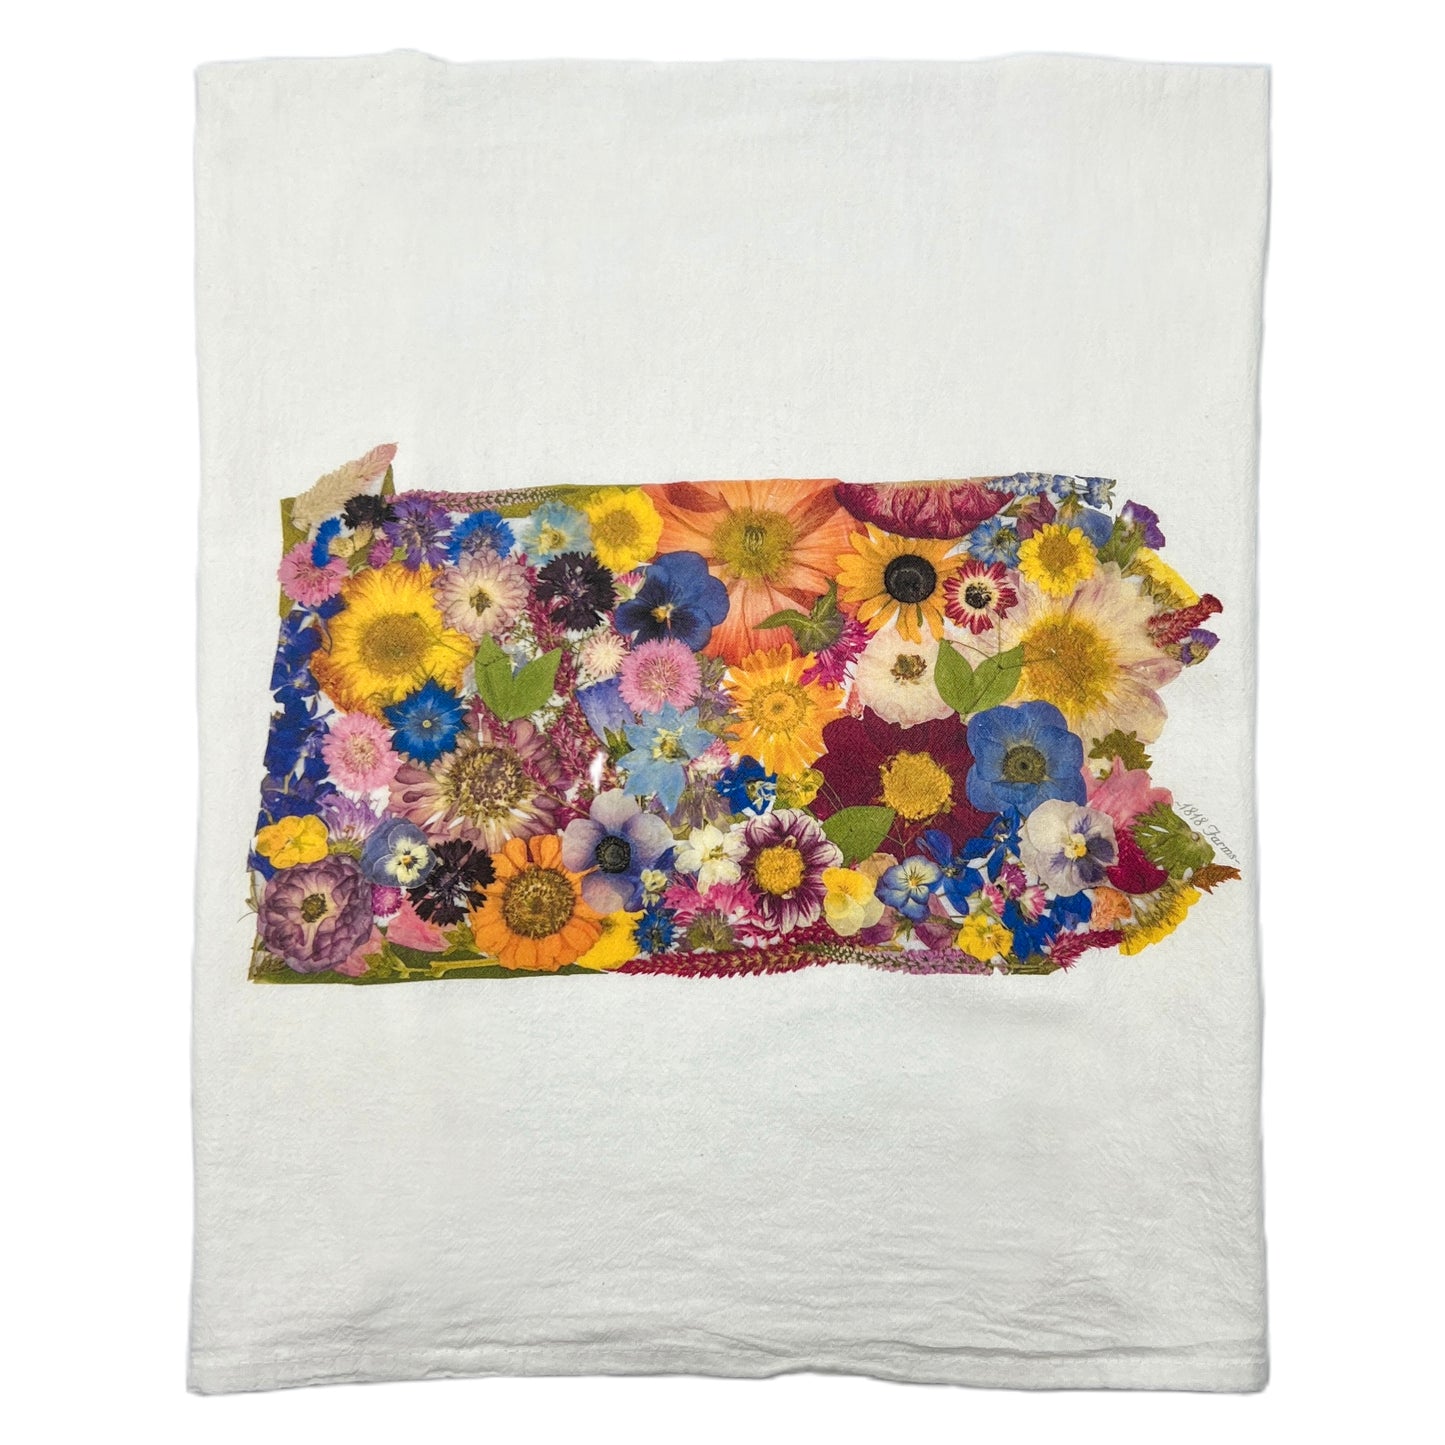 State Themed Flour Sack Towel  - "Where I Bloom" Collection Towel 1818 Farms Pennsylvania  